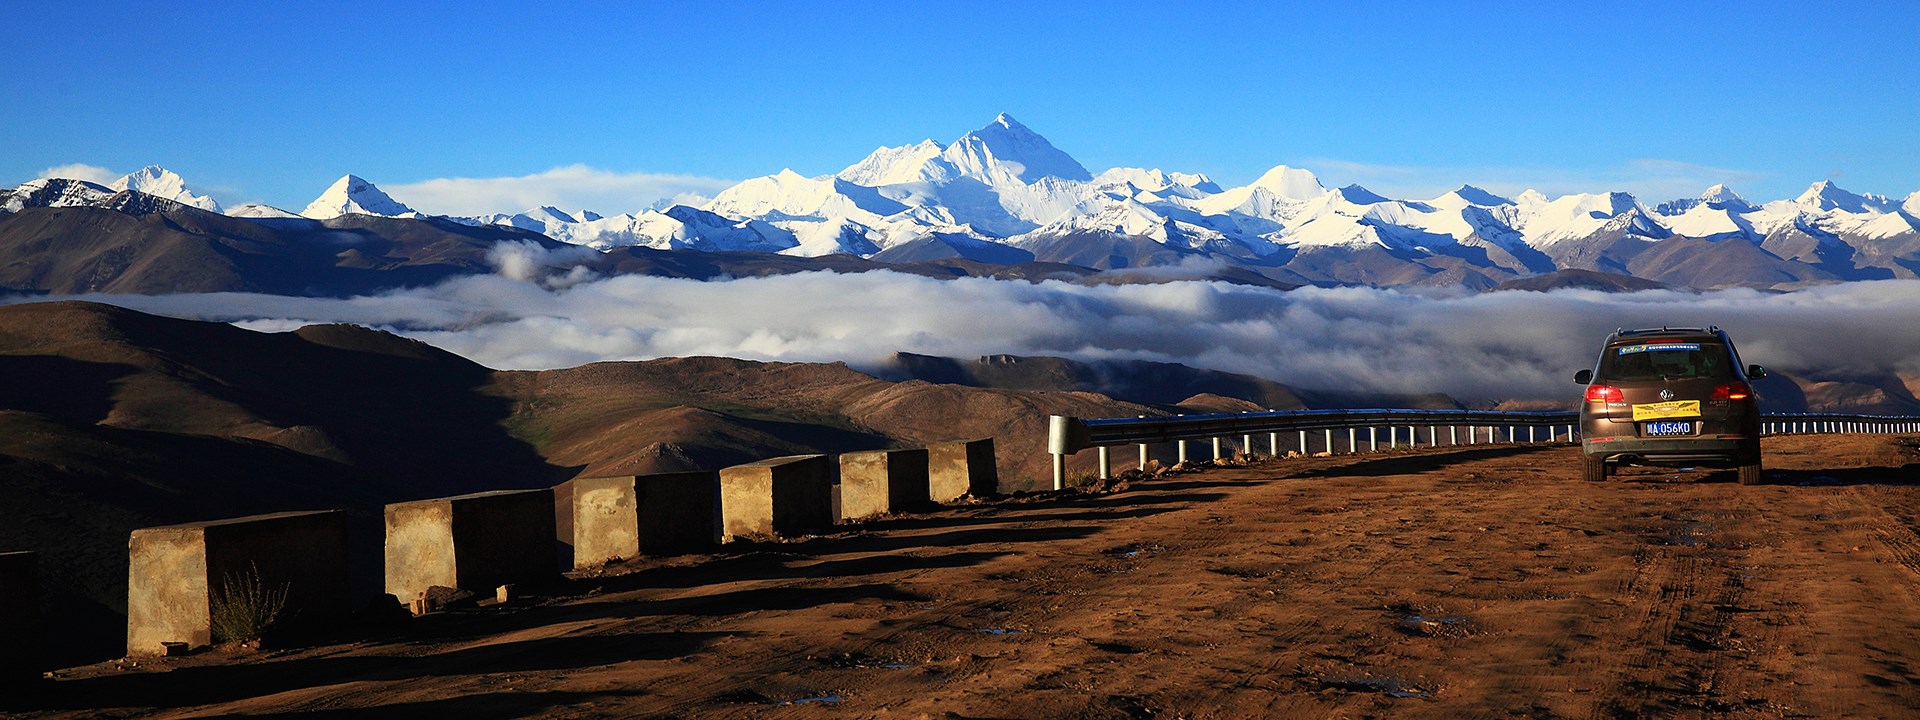 Overland Tour from Lhasa via Everest to Kathmandu